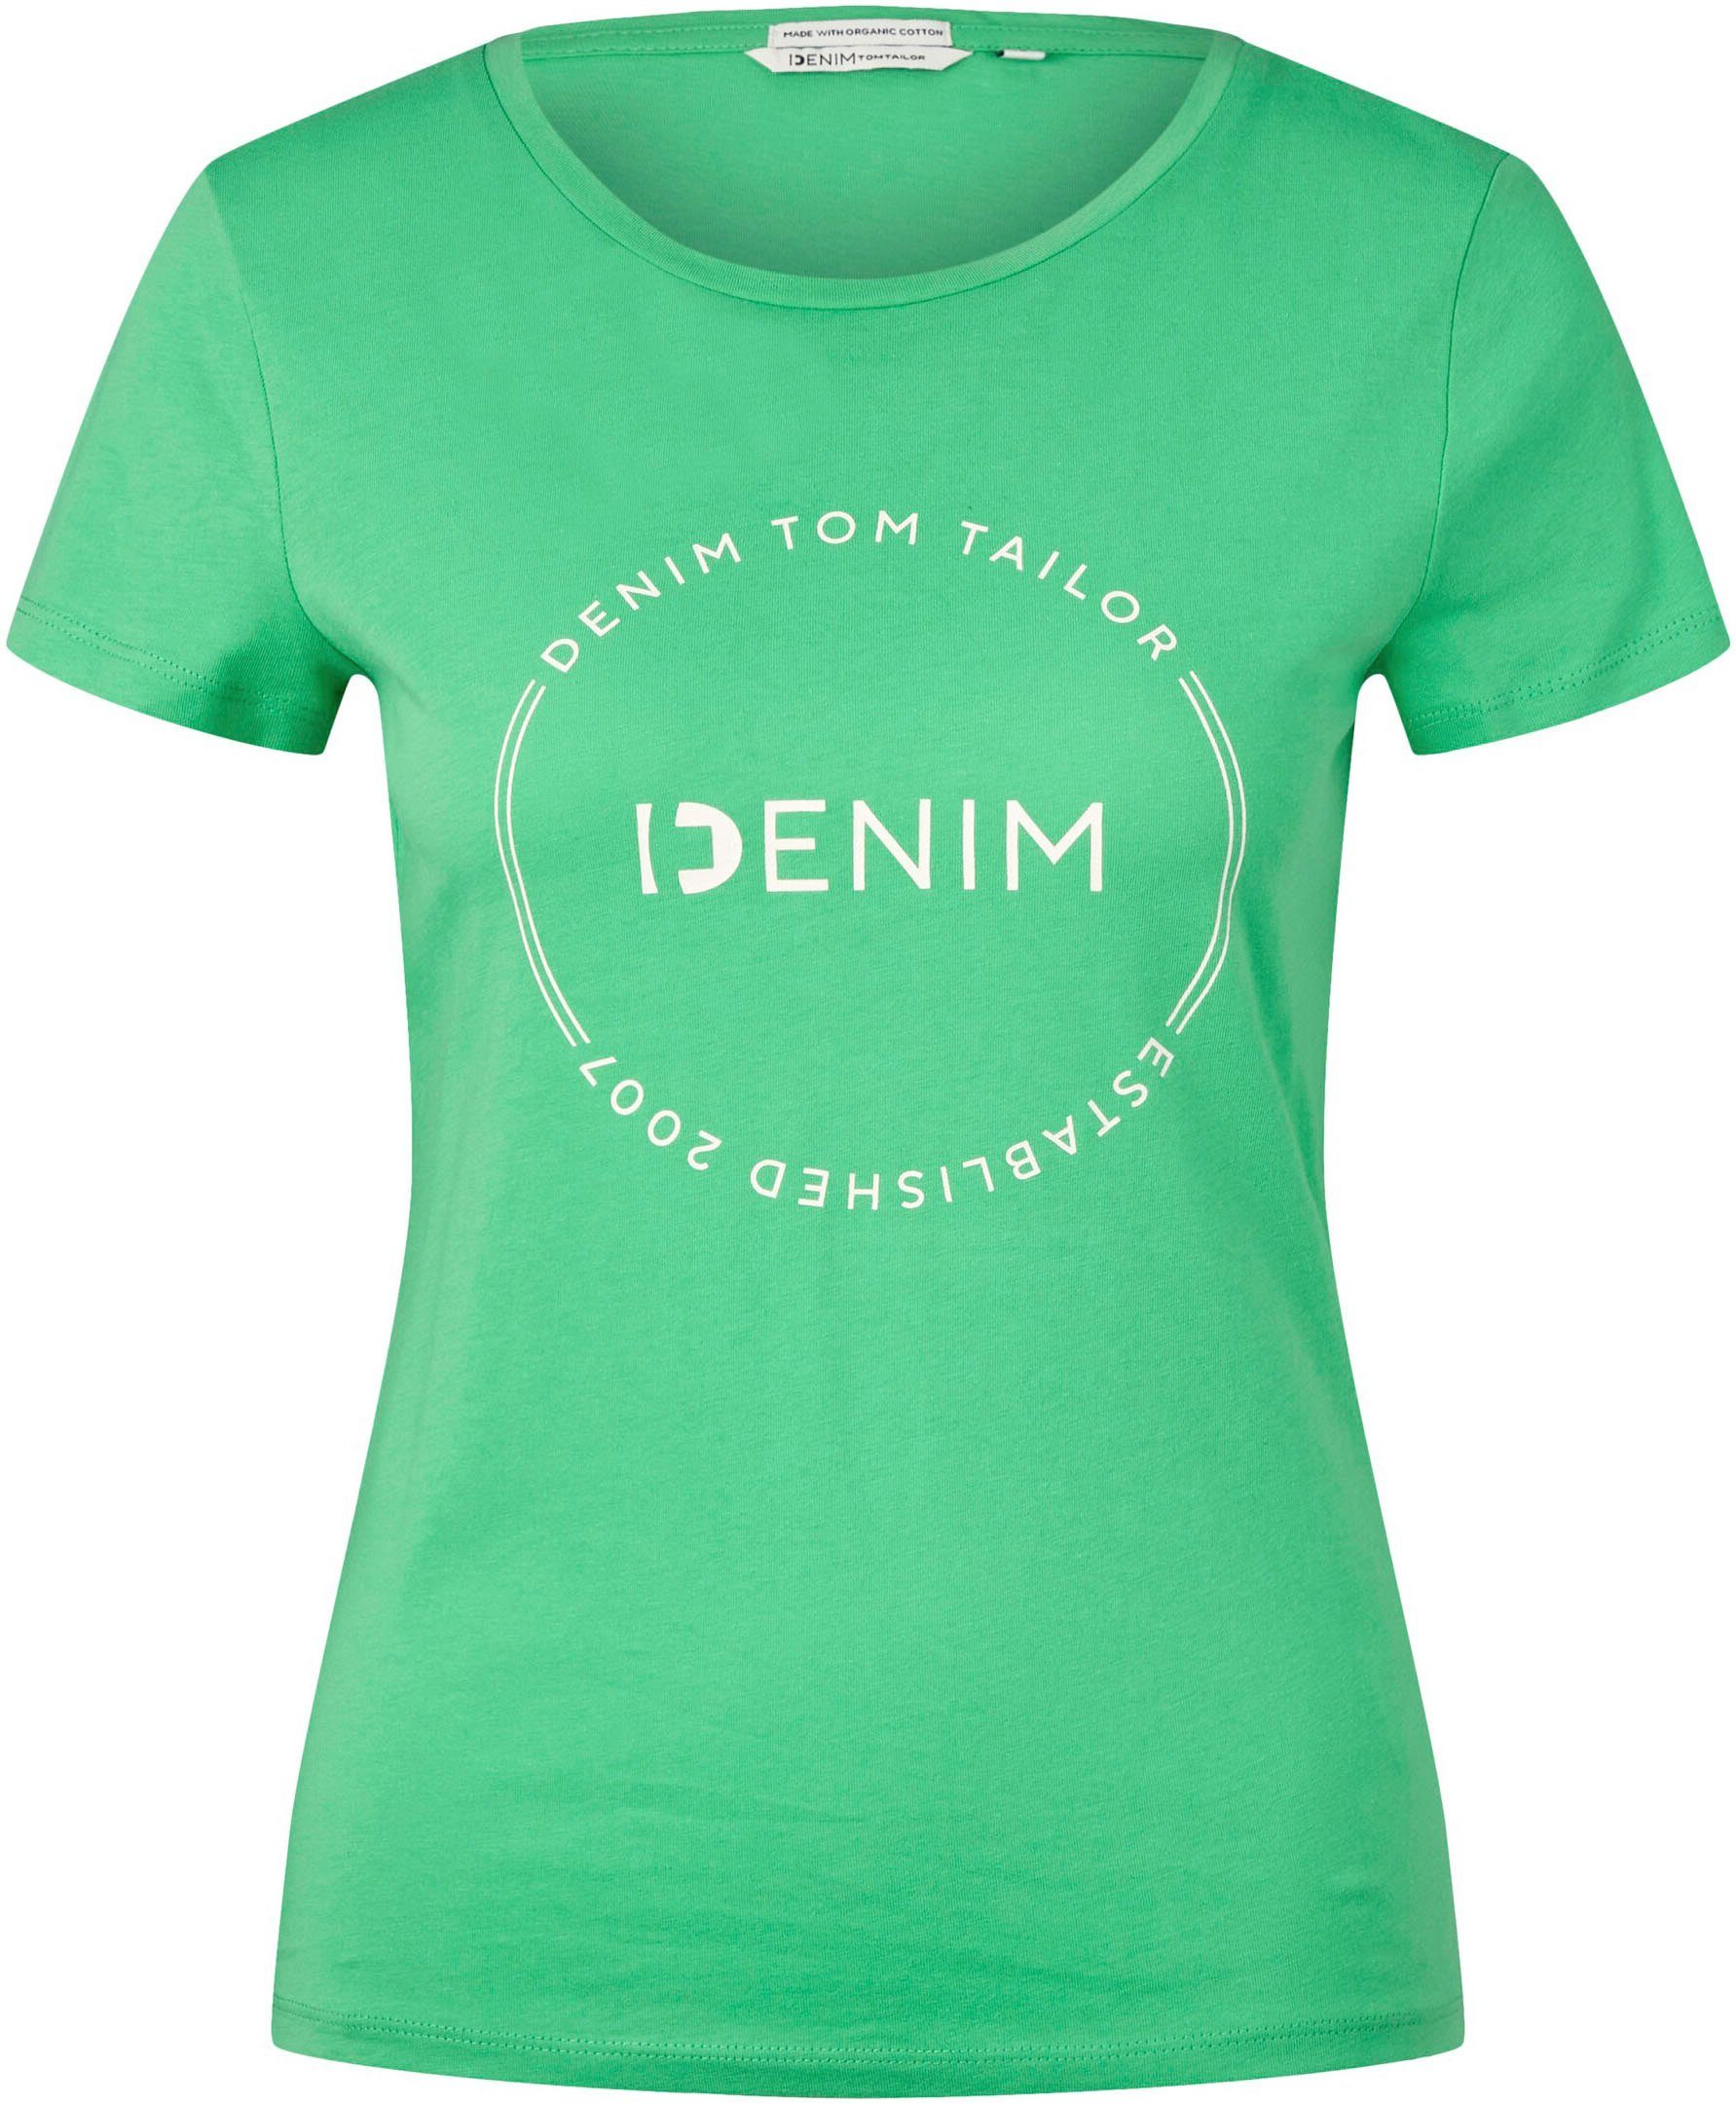 TOM TAILOR T-Shirt grün Denim